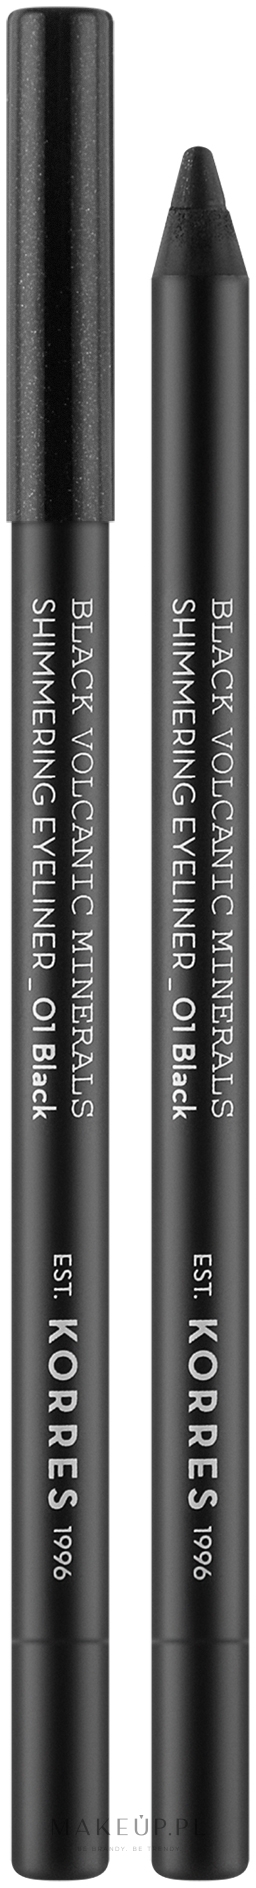 Eyeliner do oczu - Korres Black Volcanic Minerals Professional Shimmering Eyeliner — Zdjęcie 1.14 g